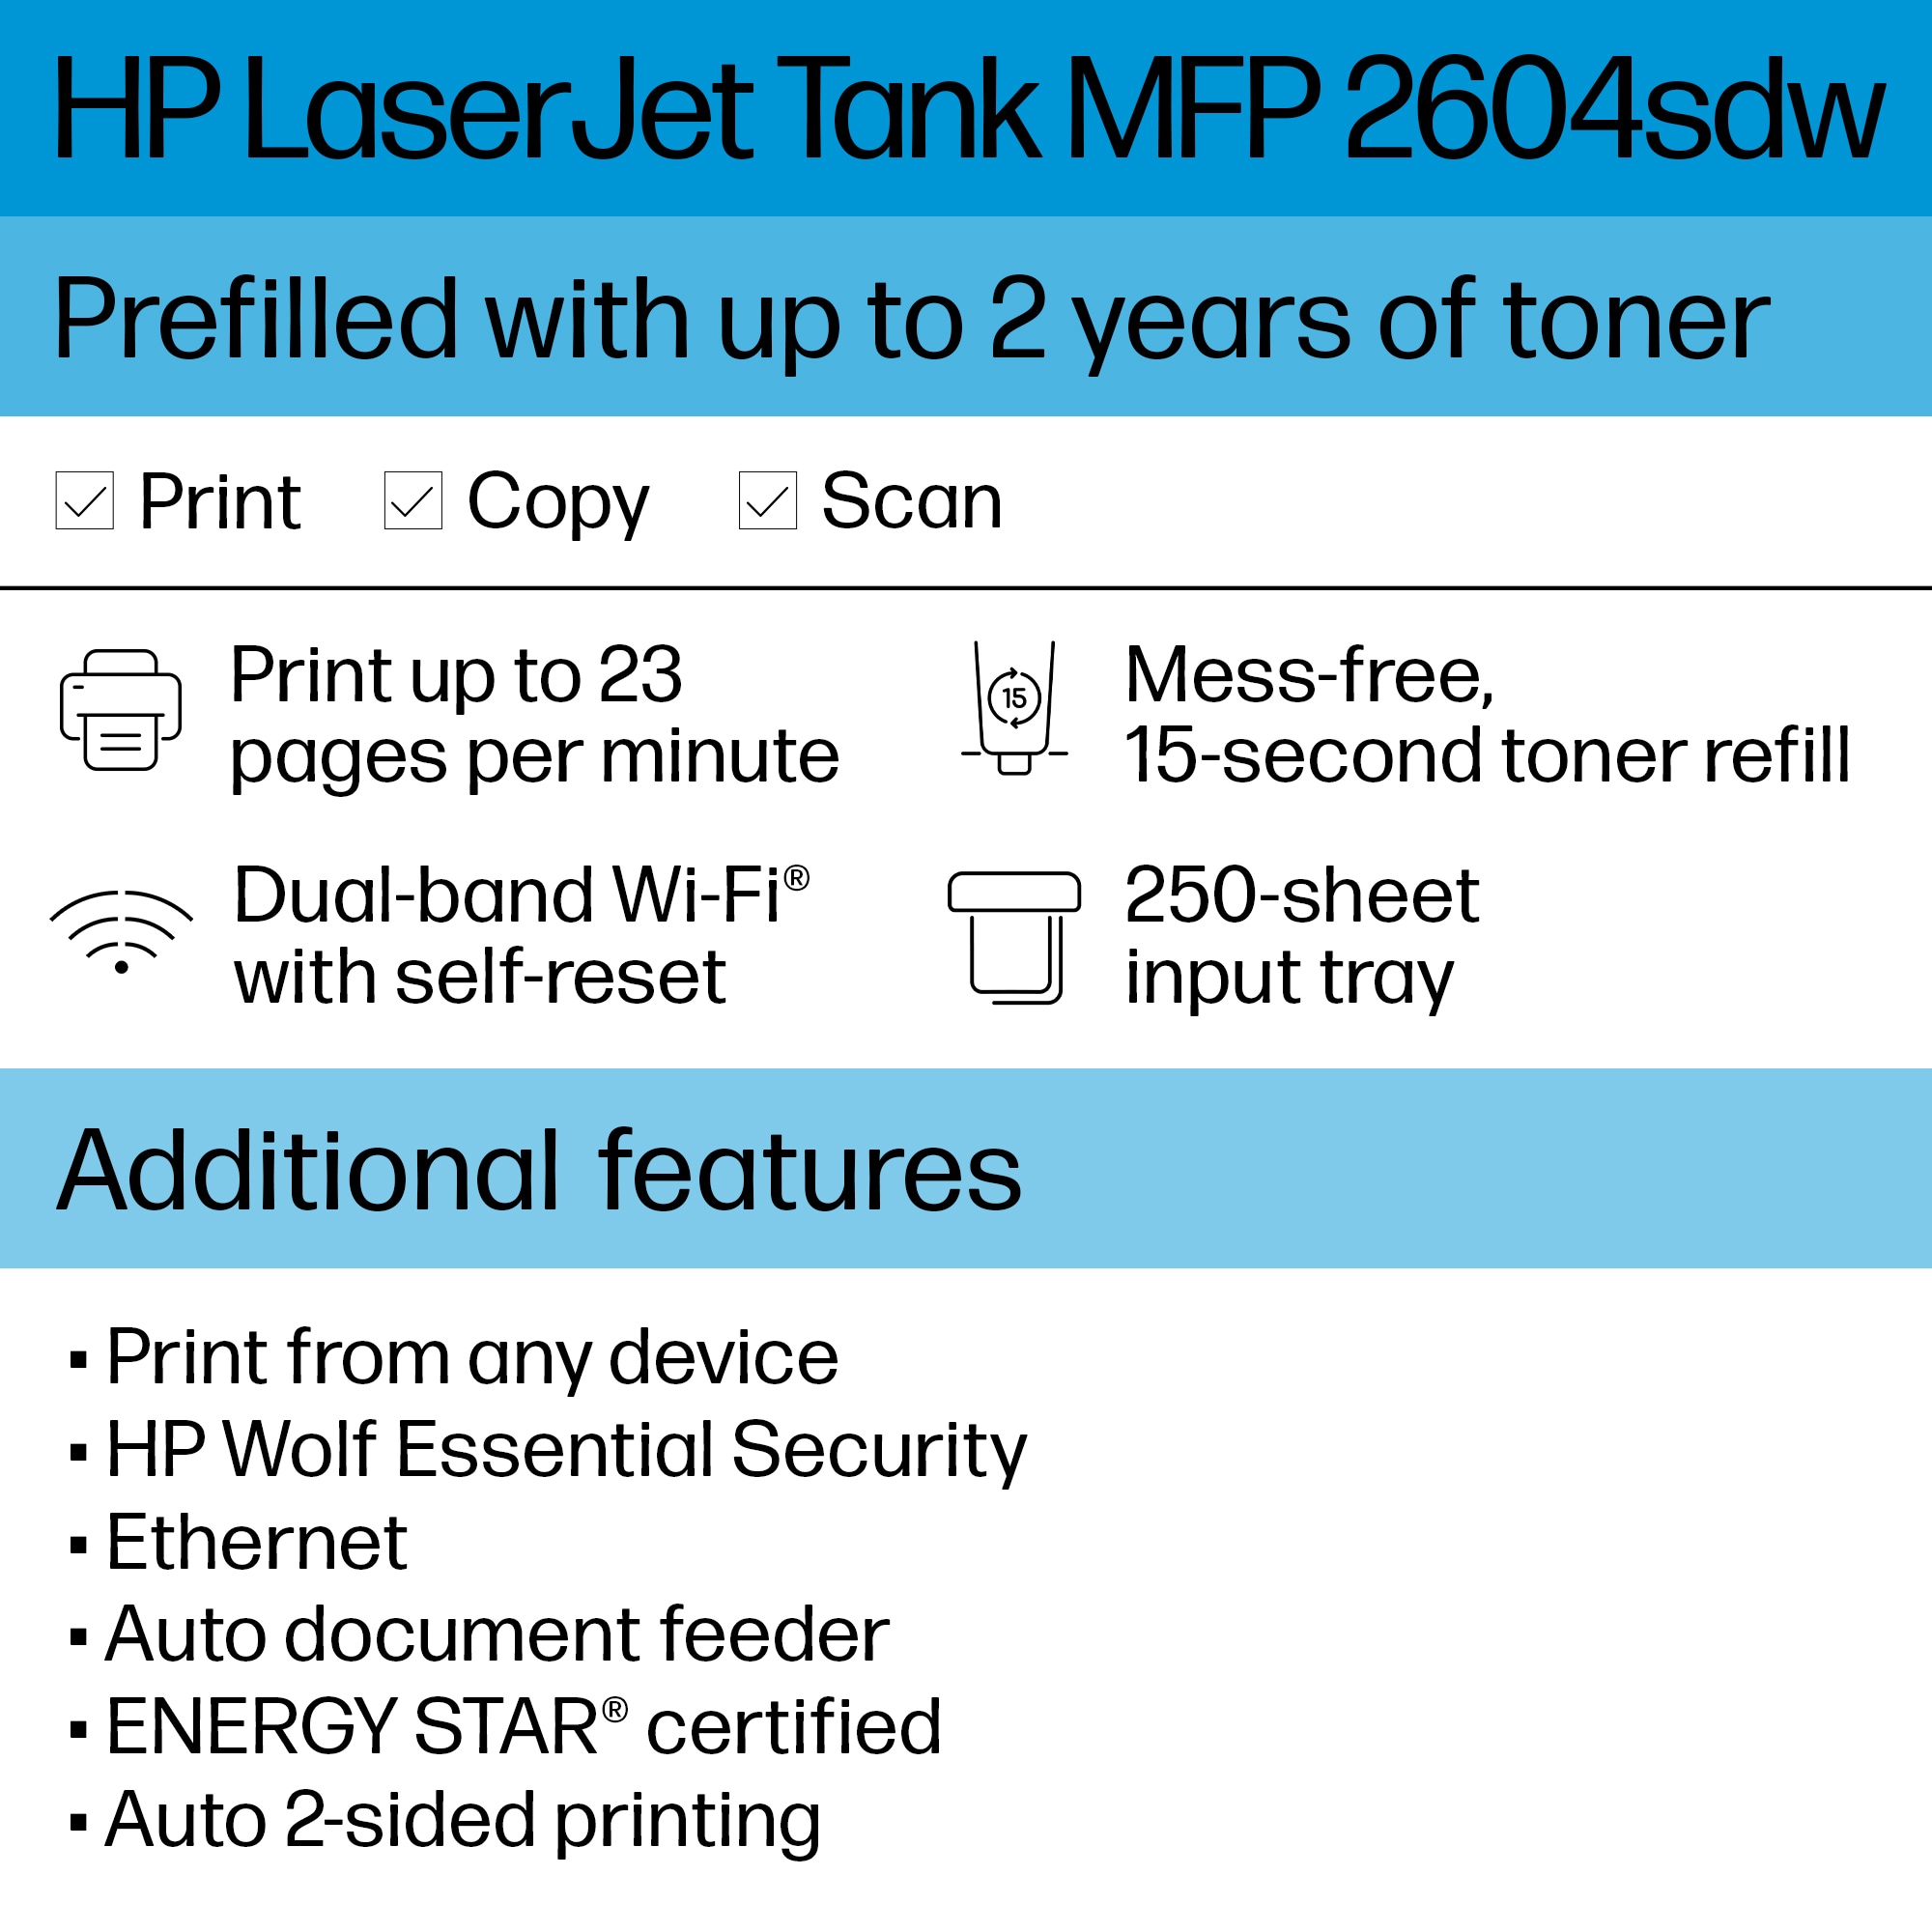 HP LaserJet Tank MFP 2604sdw Review 